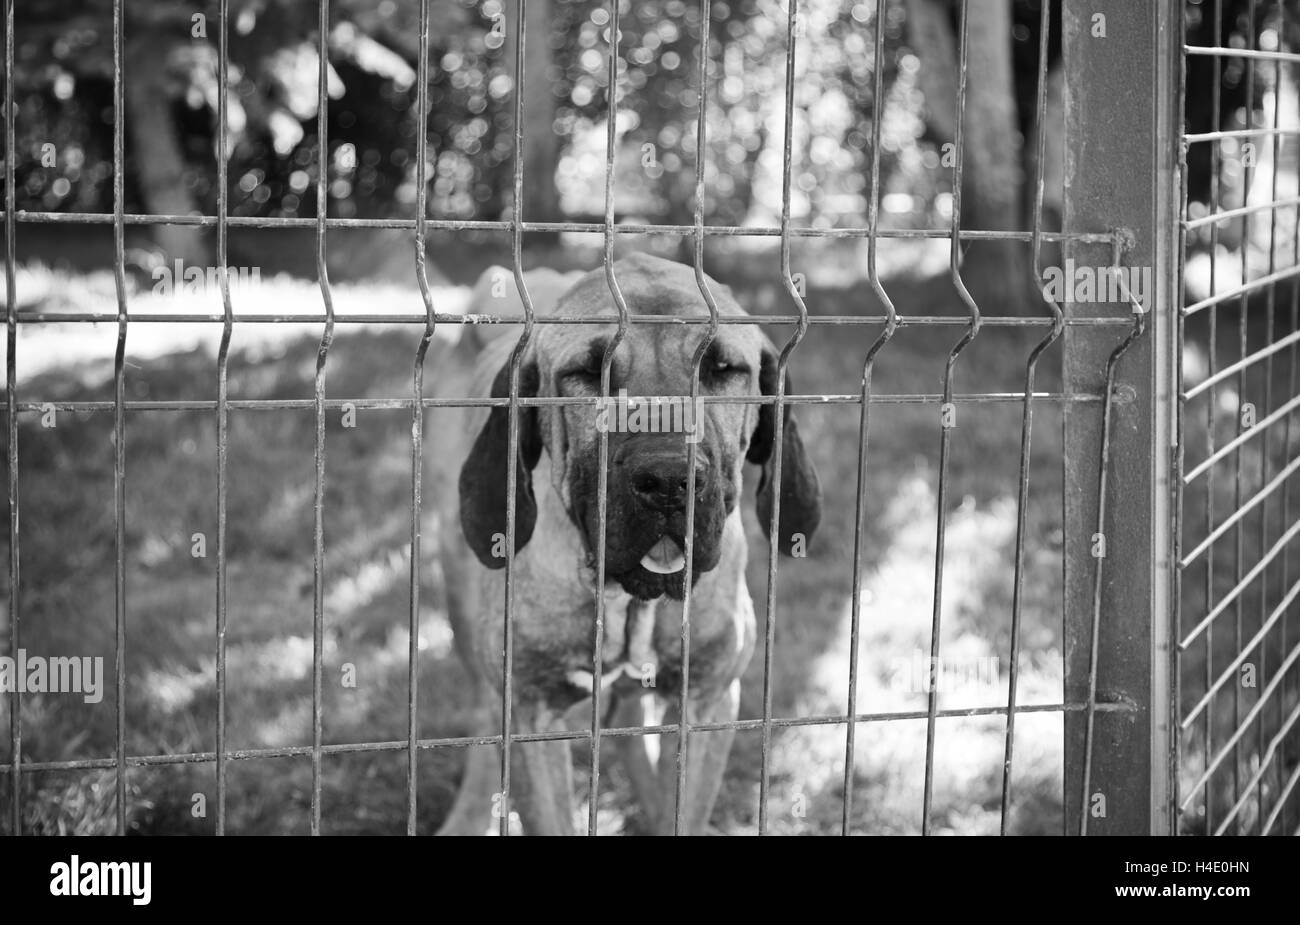 Hound dog locked and abuse, animal neglect Stock Photo